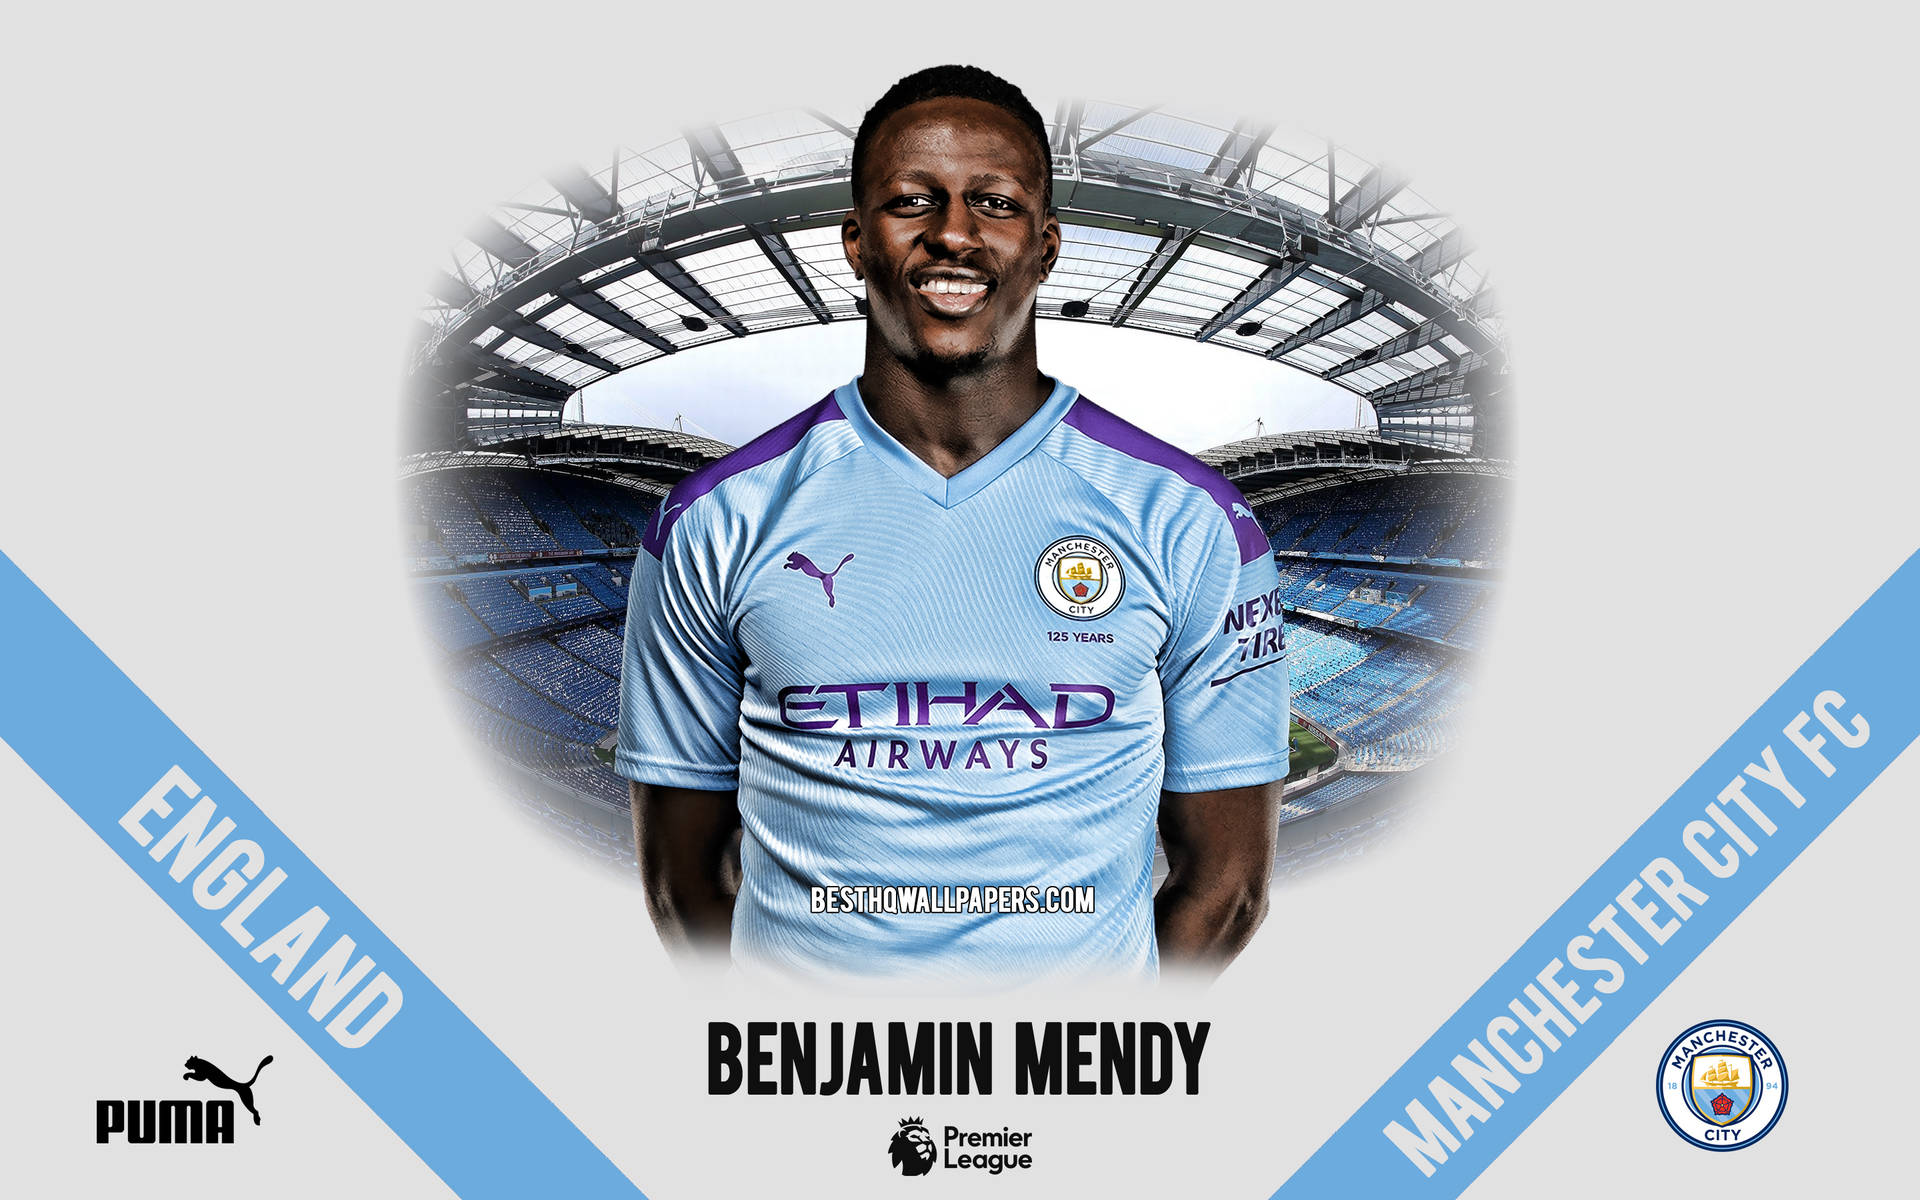 BenjaminMendy Manchester City FC (Benjamin Mendy von Manchester City FC) Wallpaper